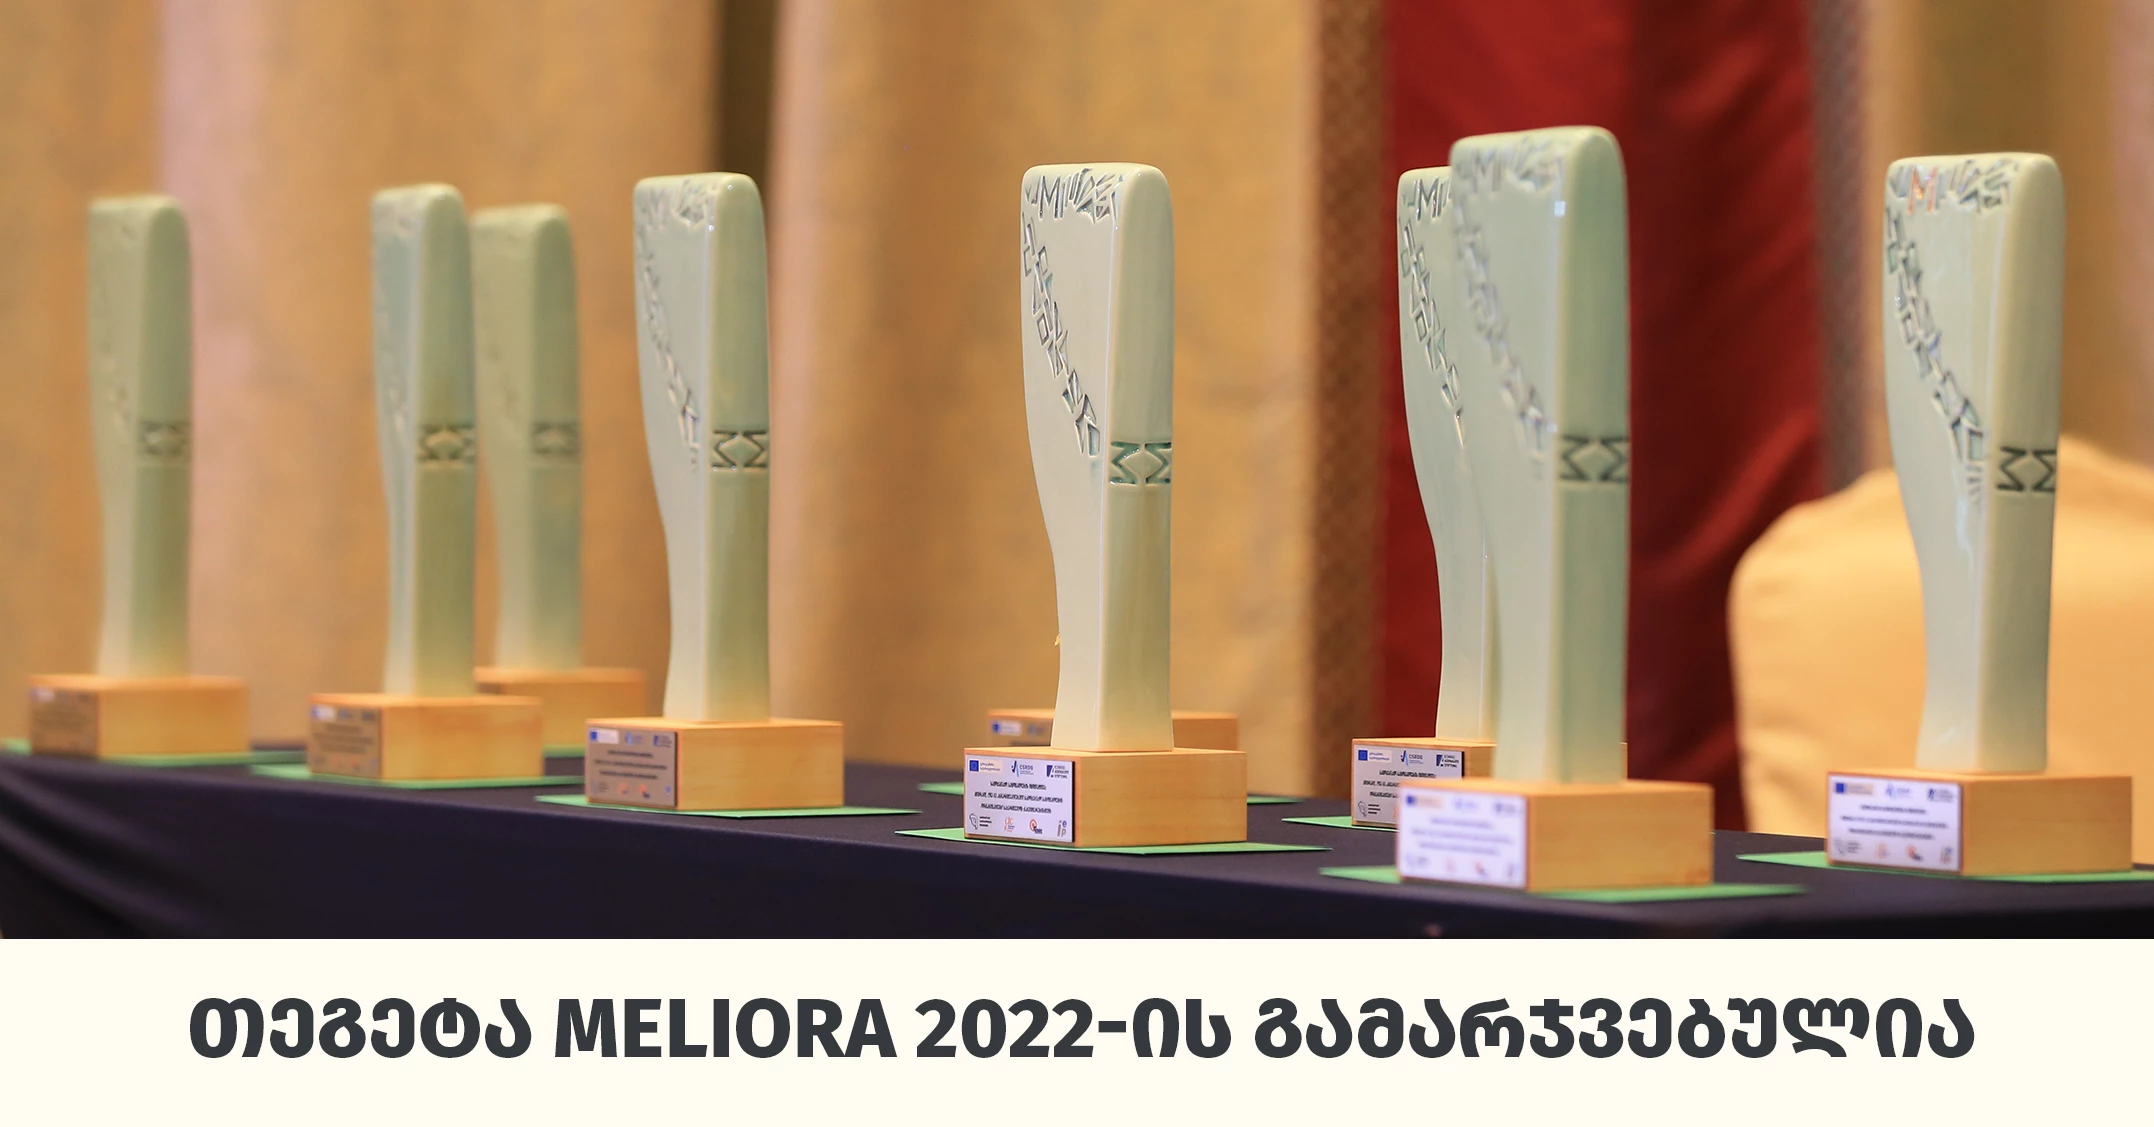 Tegeta for the Environment – “Tegeta Holding” is the winner of Georgia's Meliora 2022 Responsible Business Award